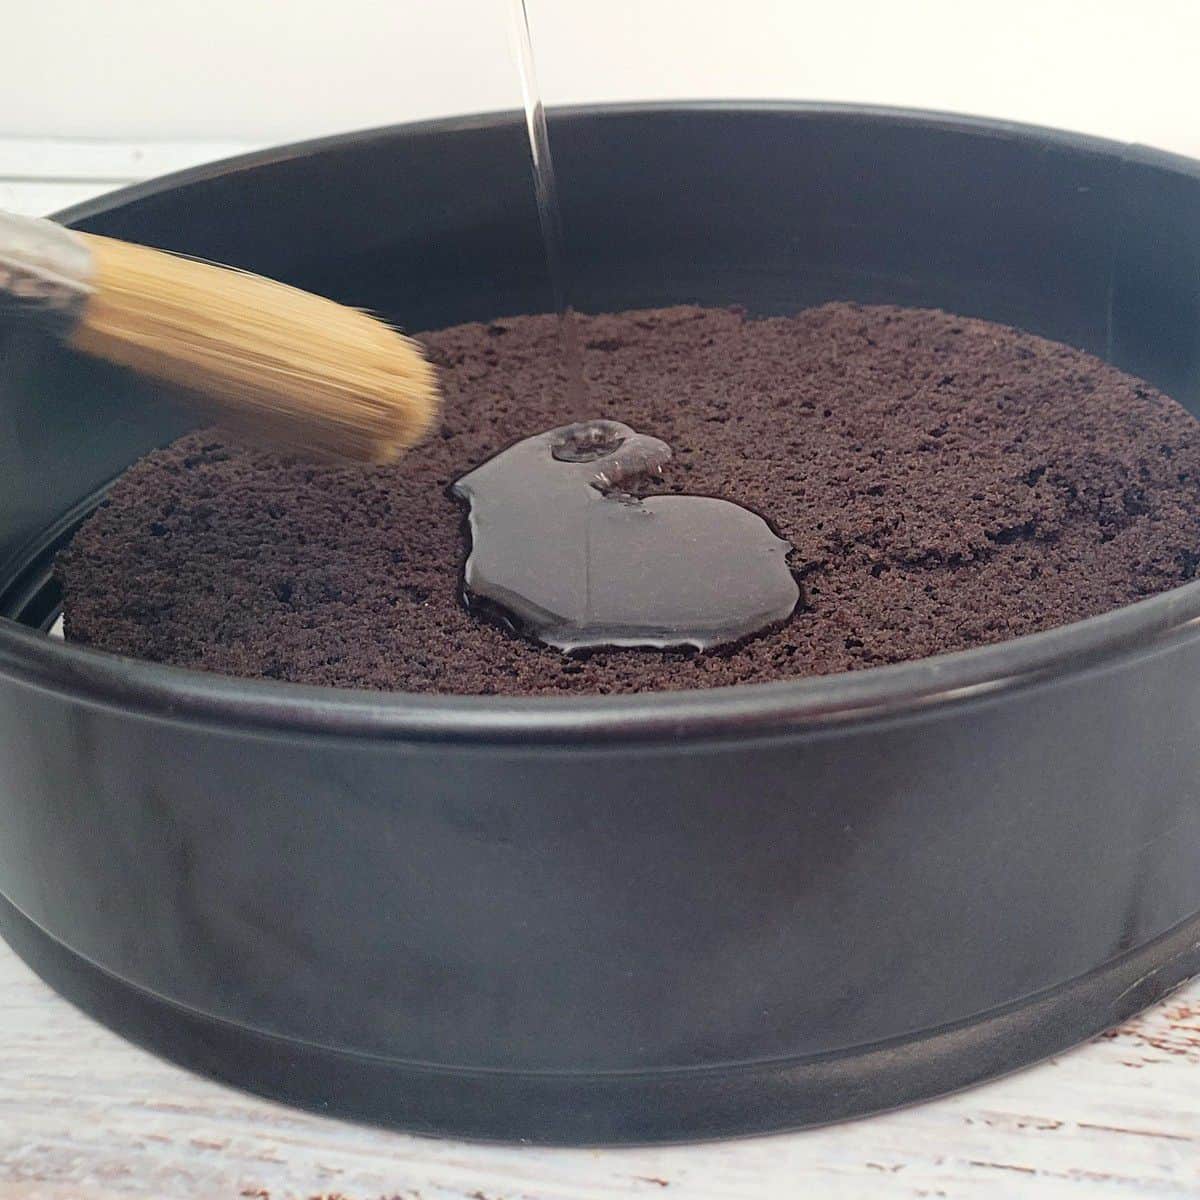 adding simple syrup to chocolate cake